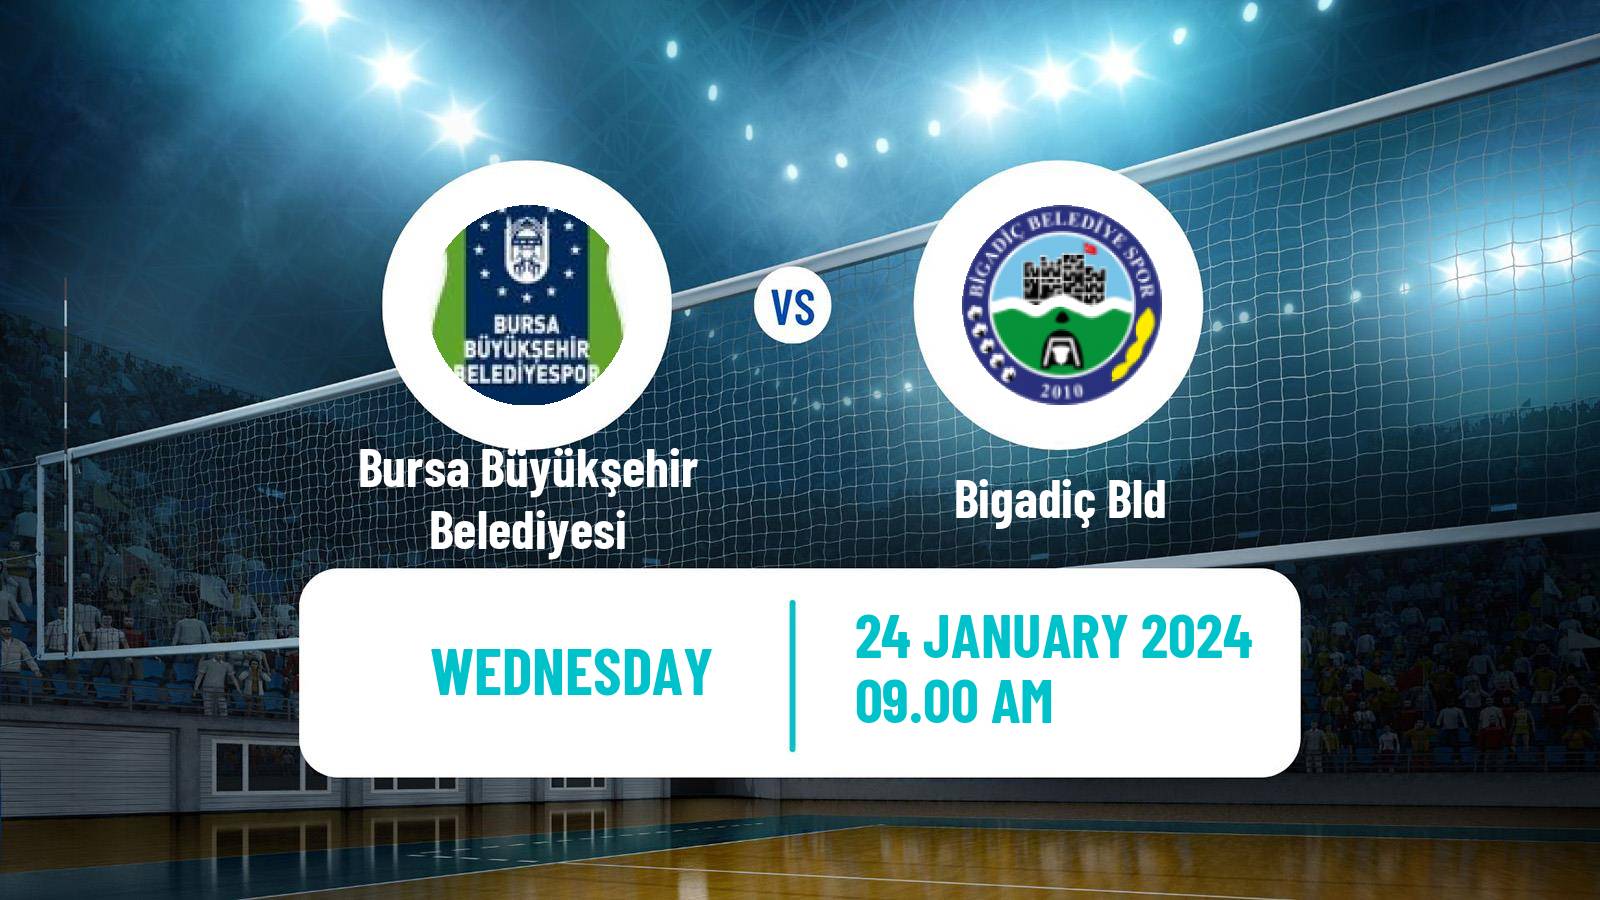 Volleyball Turkish Efeler Ligi Volleyball Bursa Büyükşehir Belediyesi - Bigadiç Bld